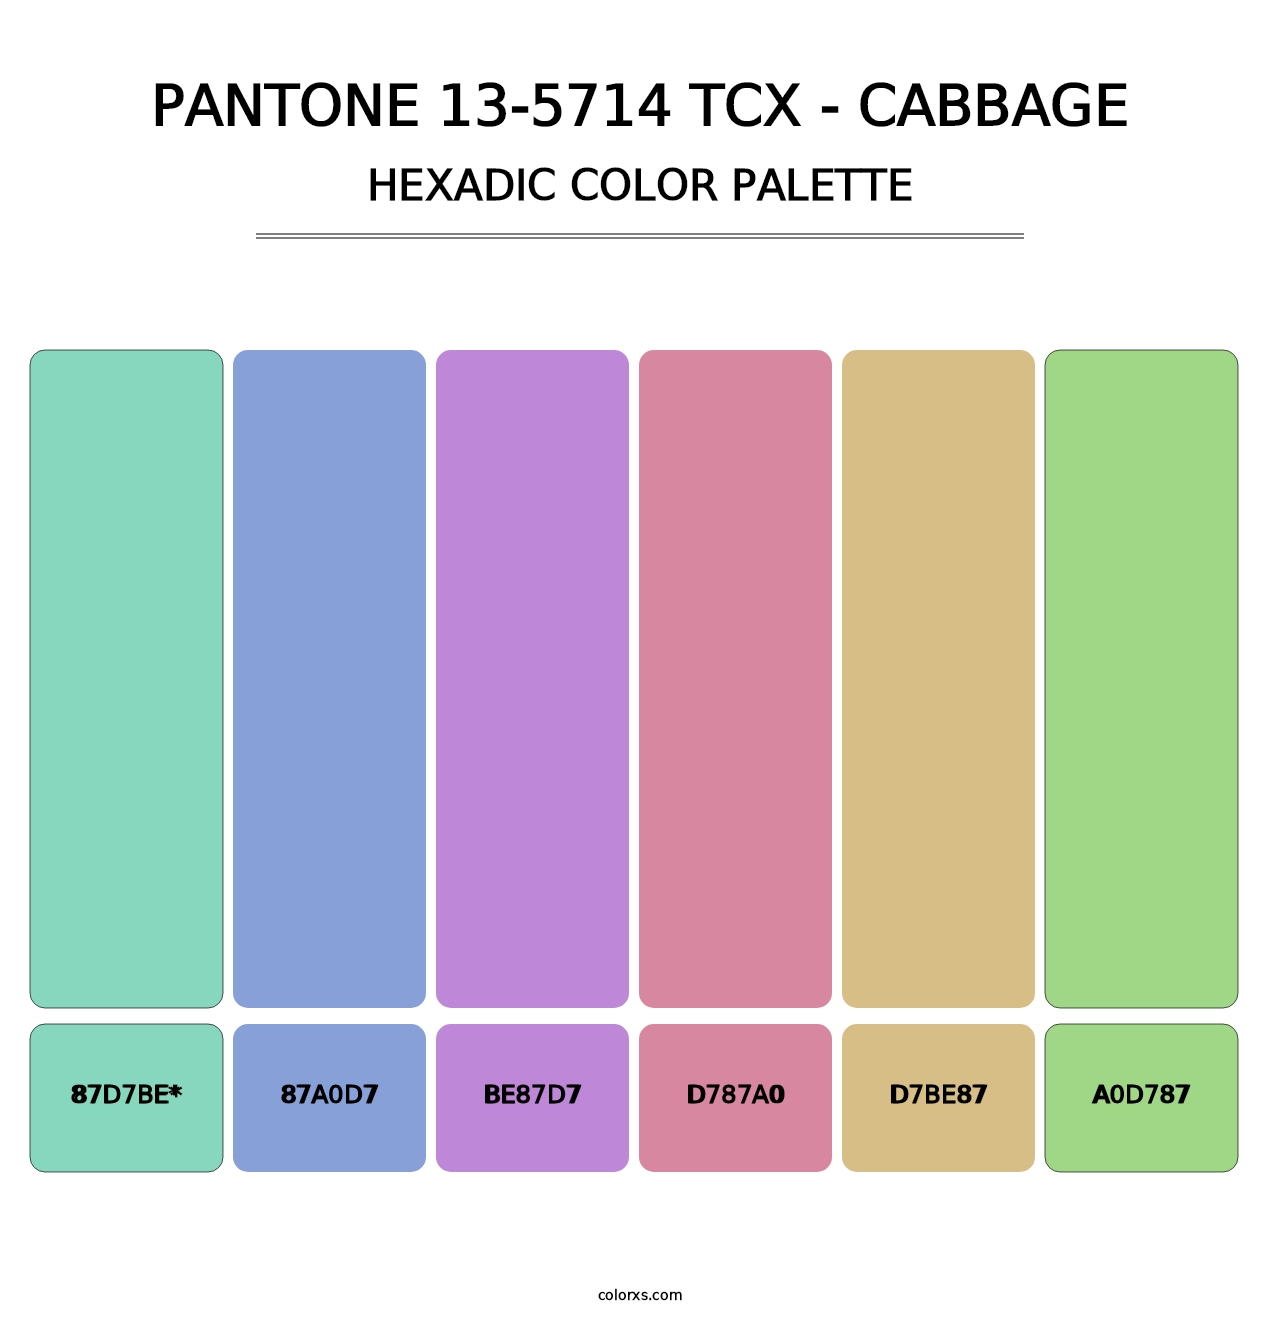 PANTONE 13-5714 TCX - Cabbage - Hexadic Color Palette